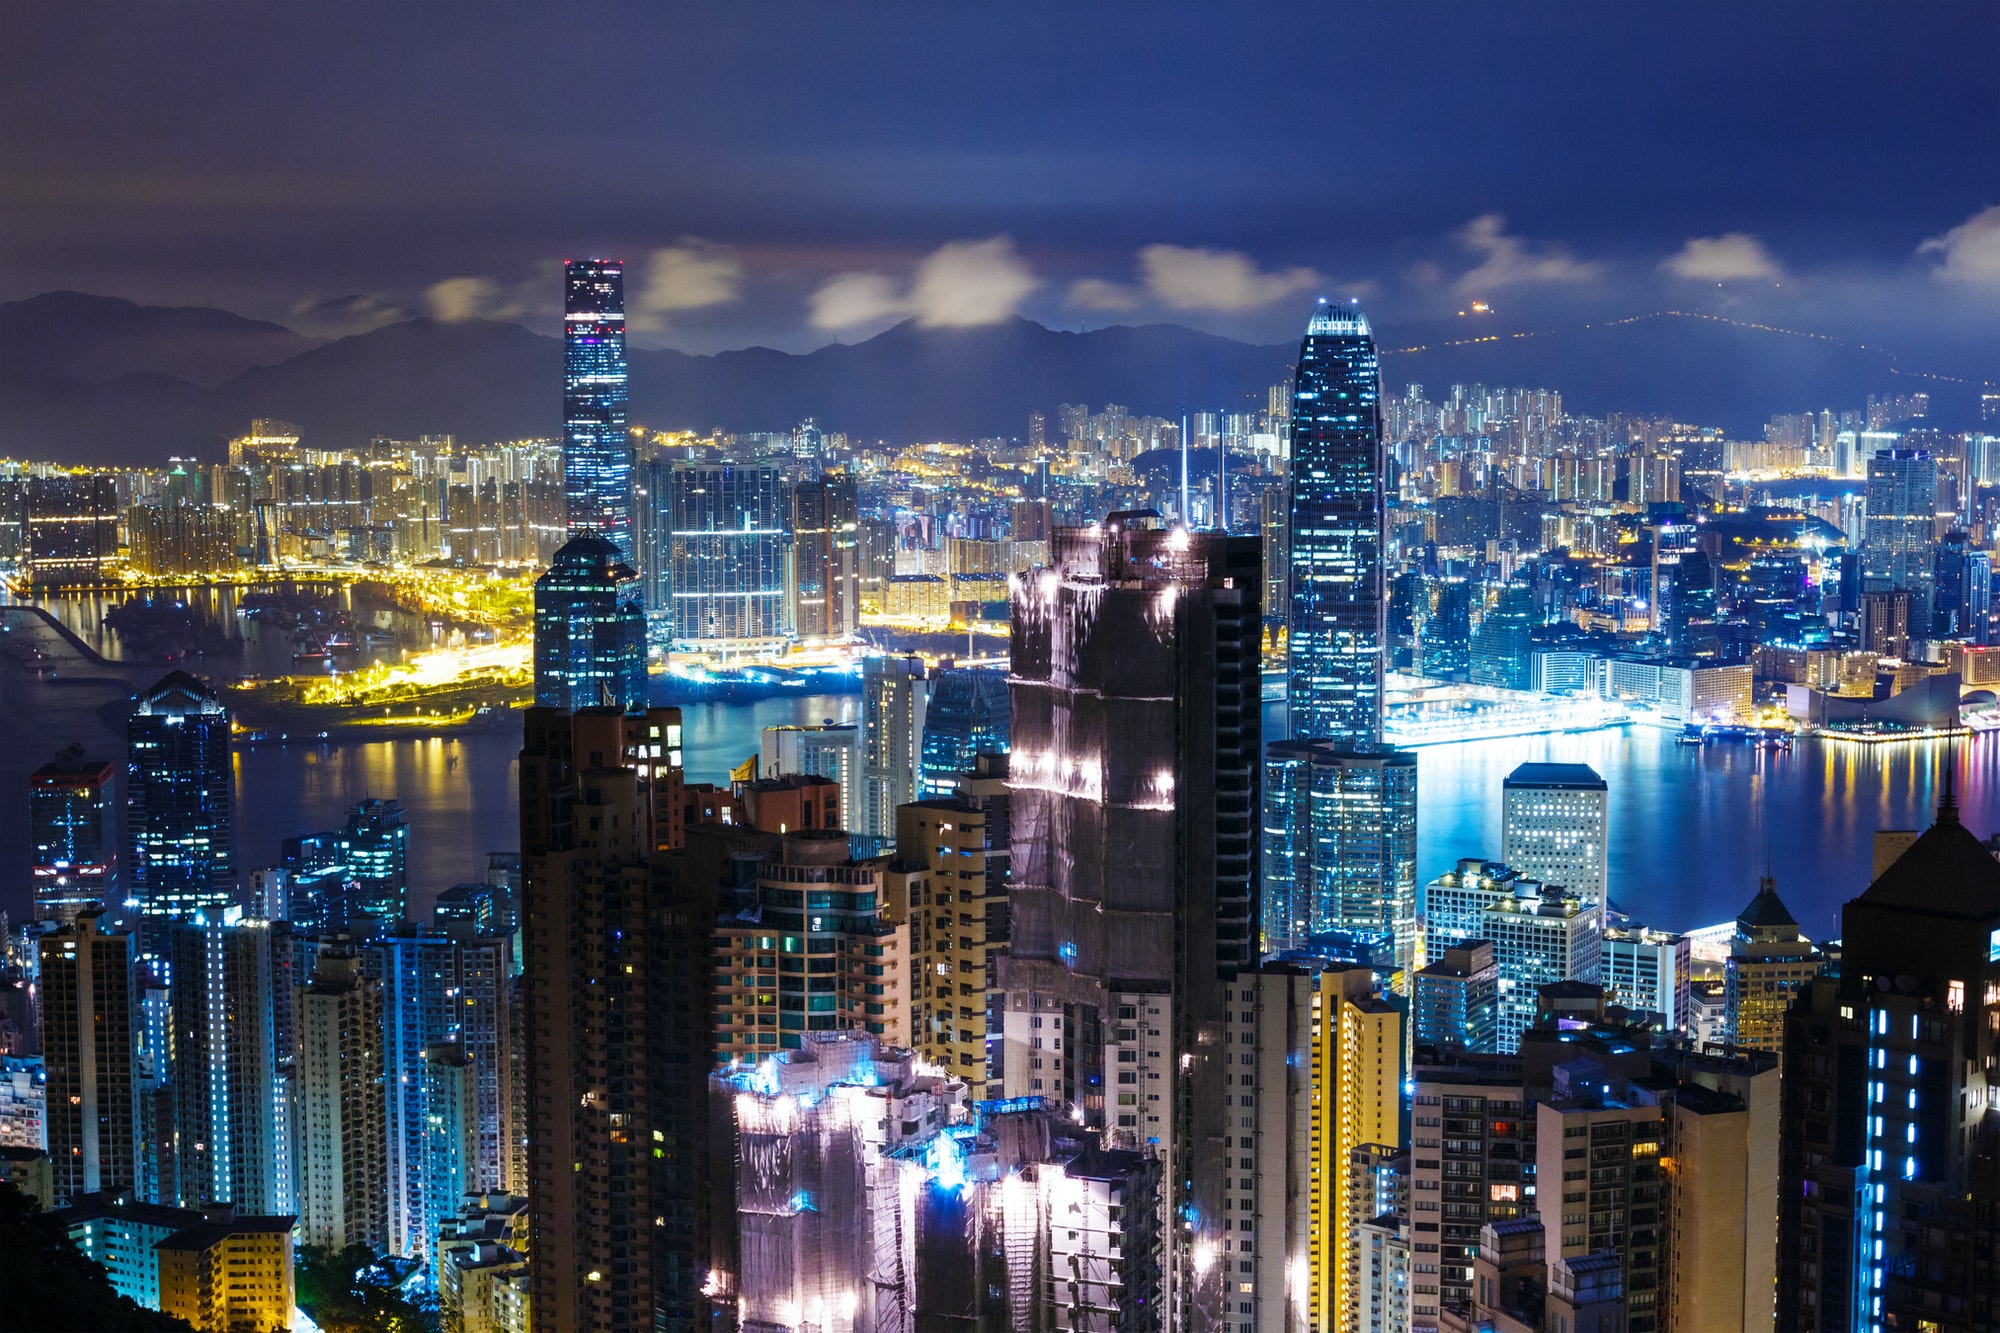 Hong Kong skyline from Peak at mid night